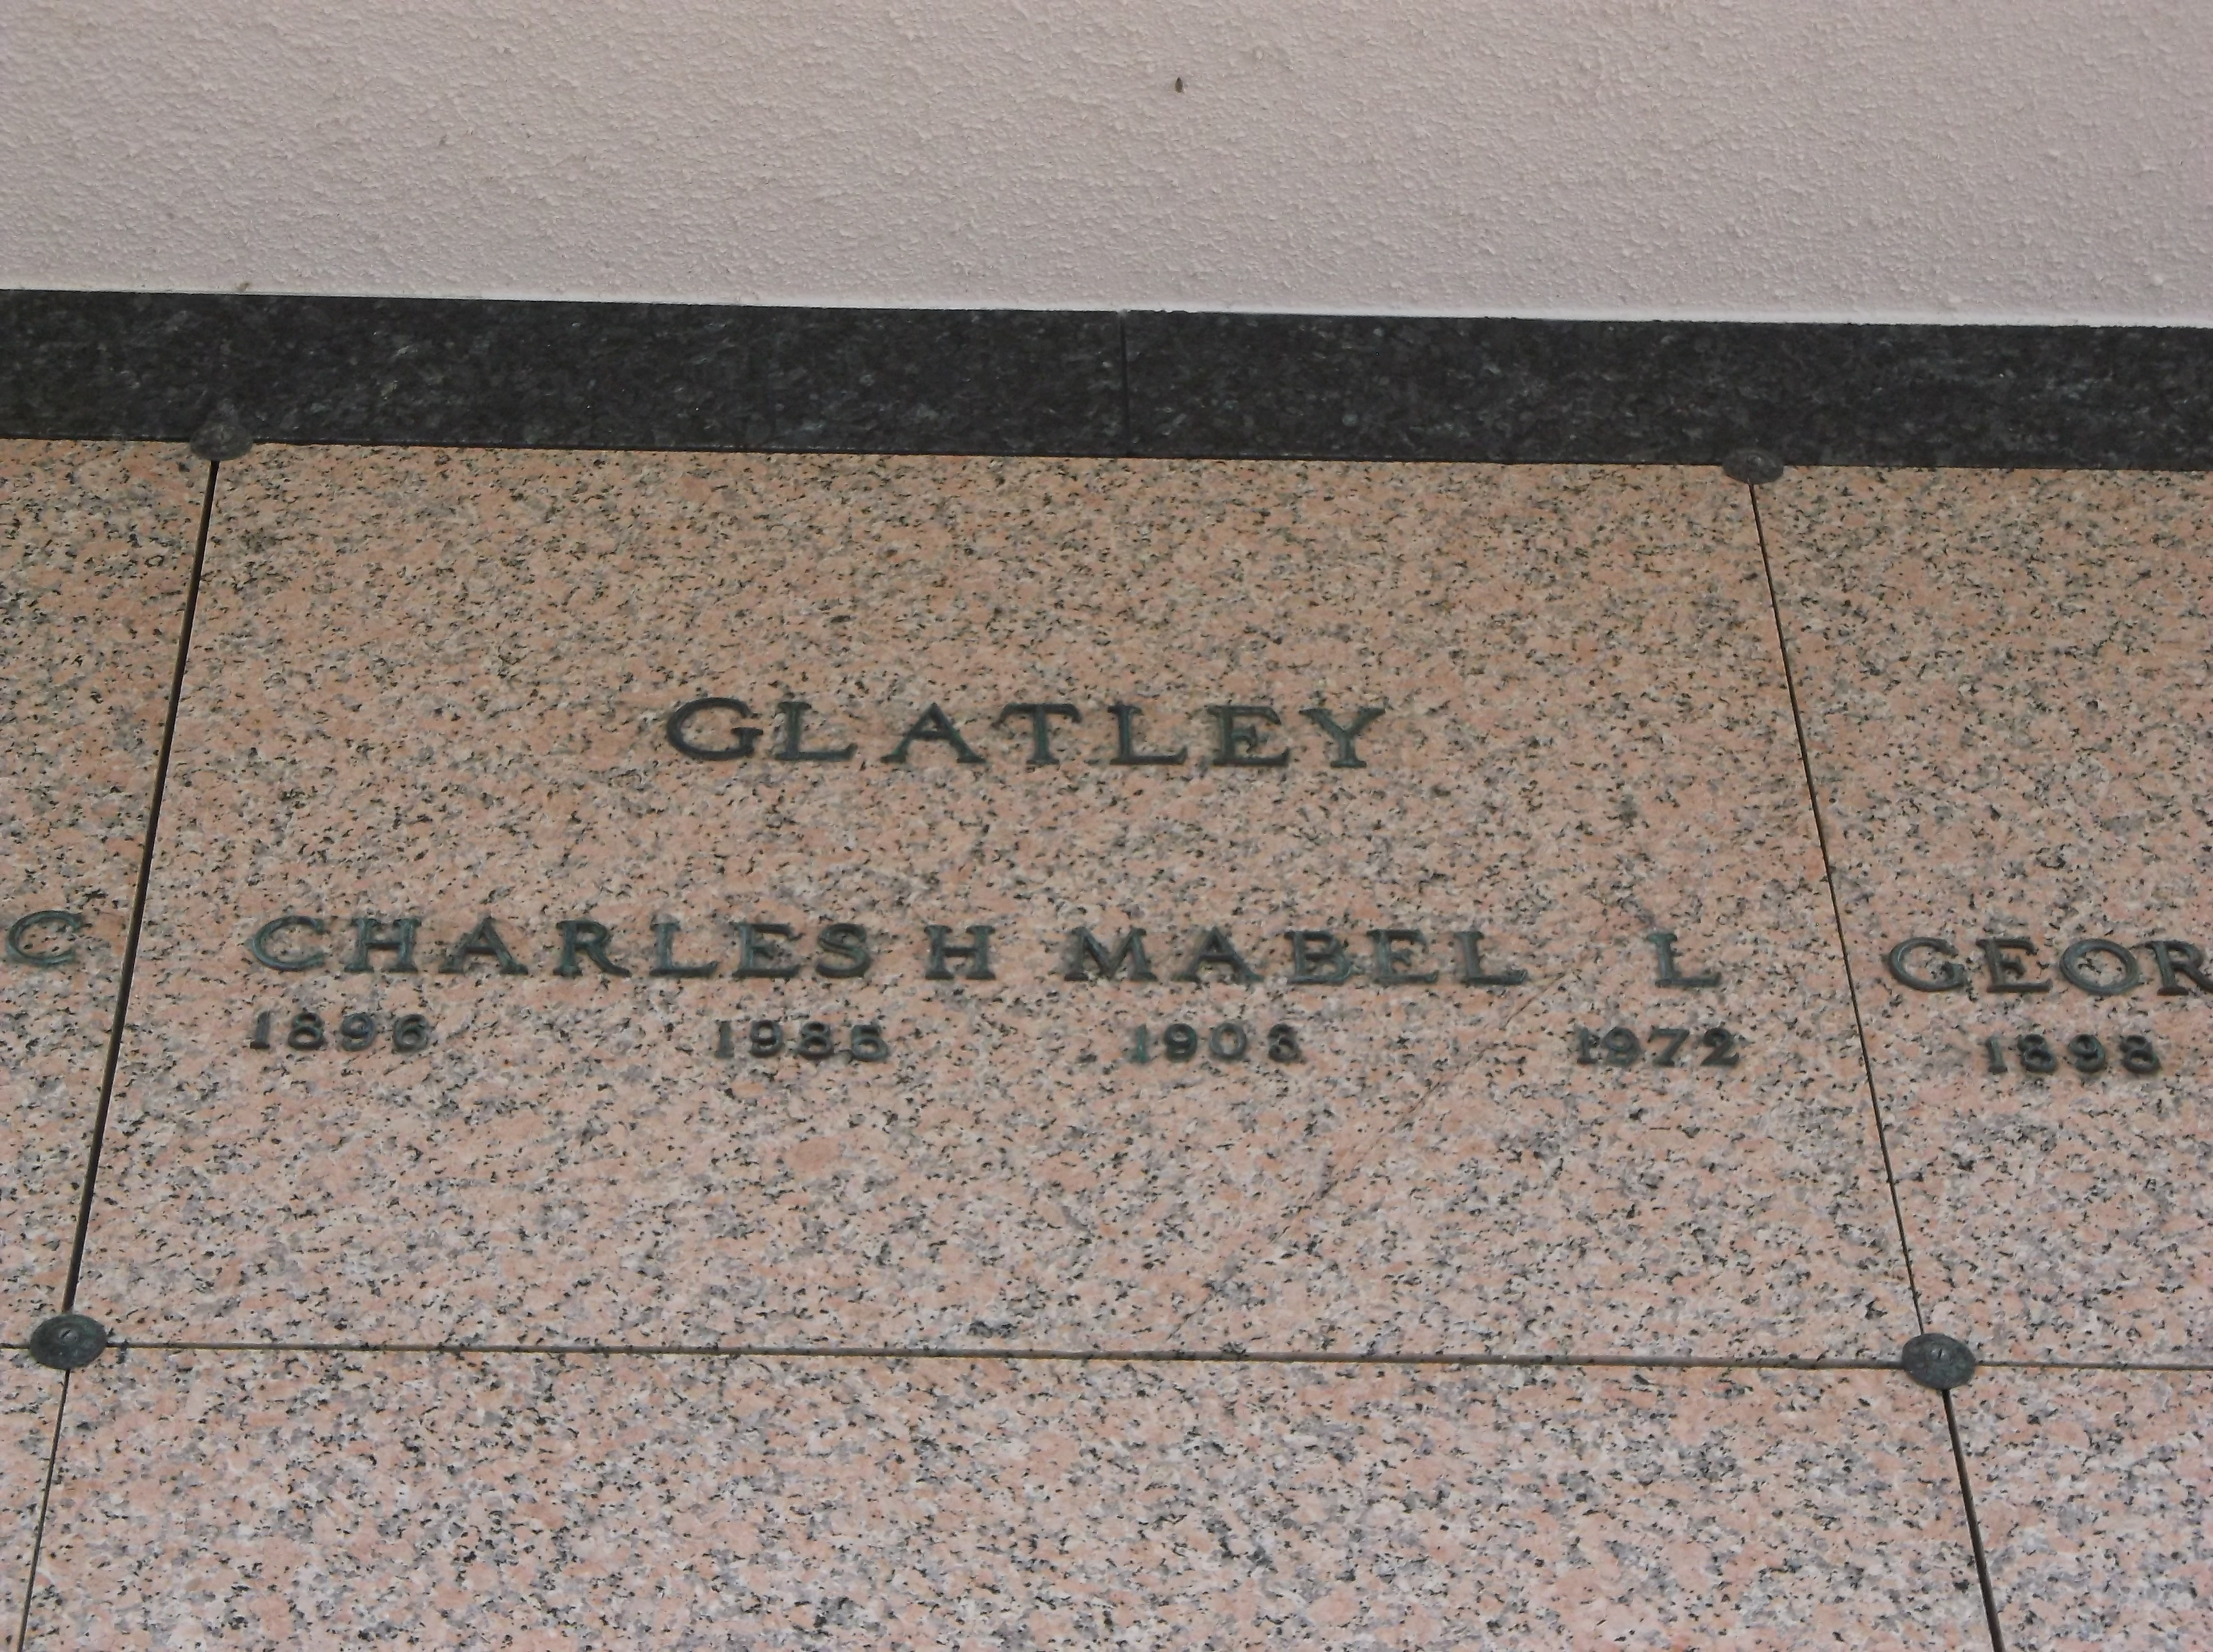 Charles H Glatley